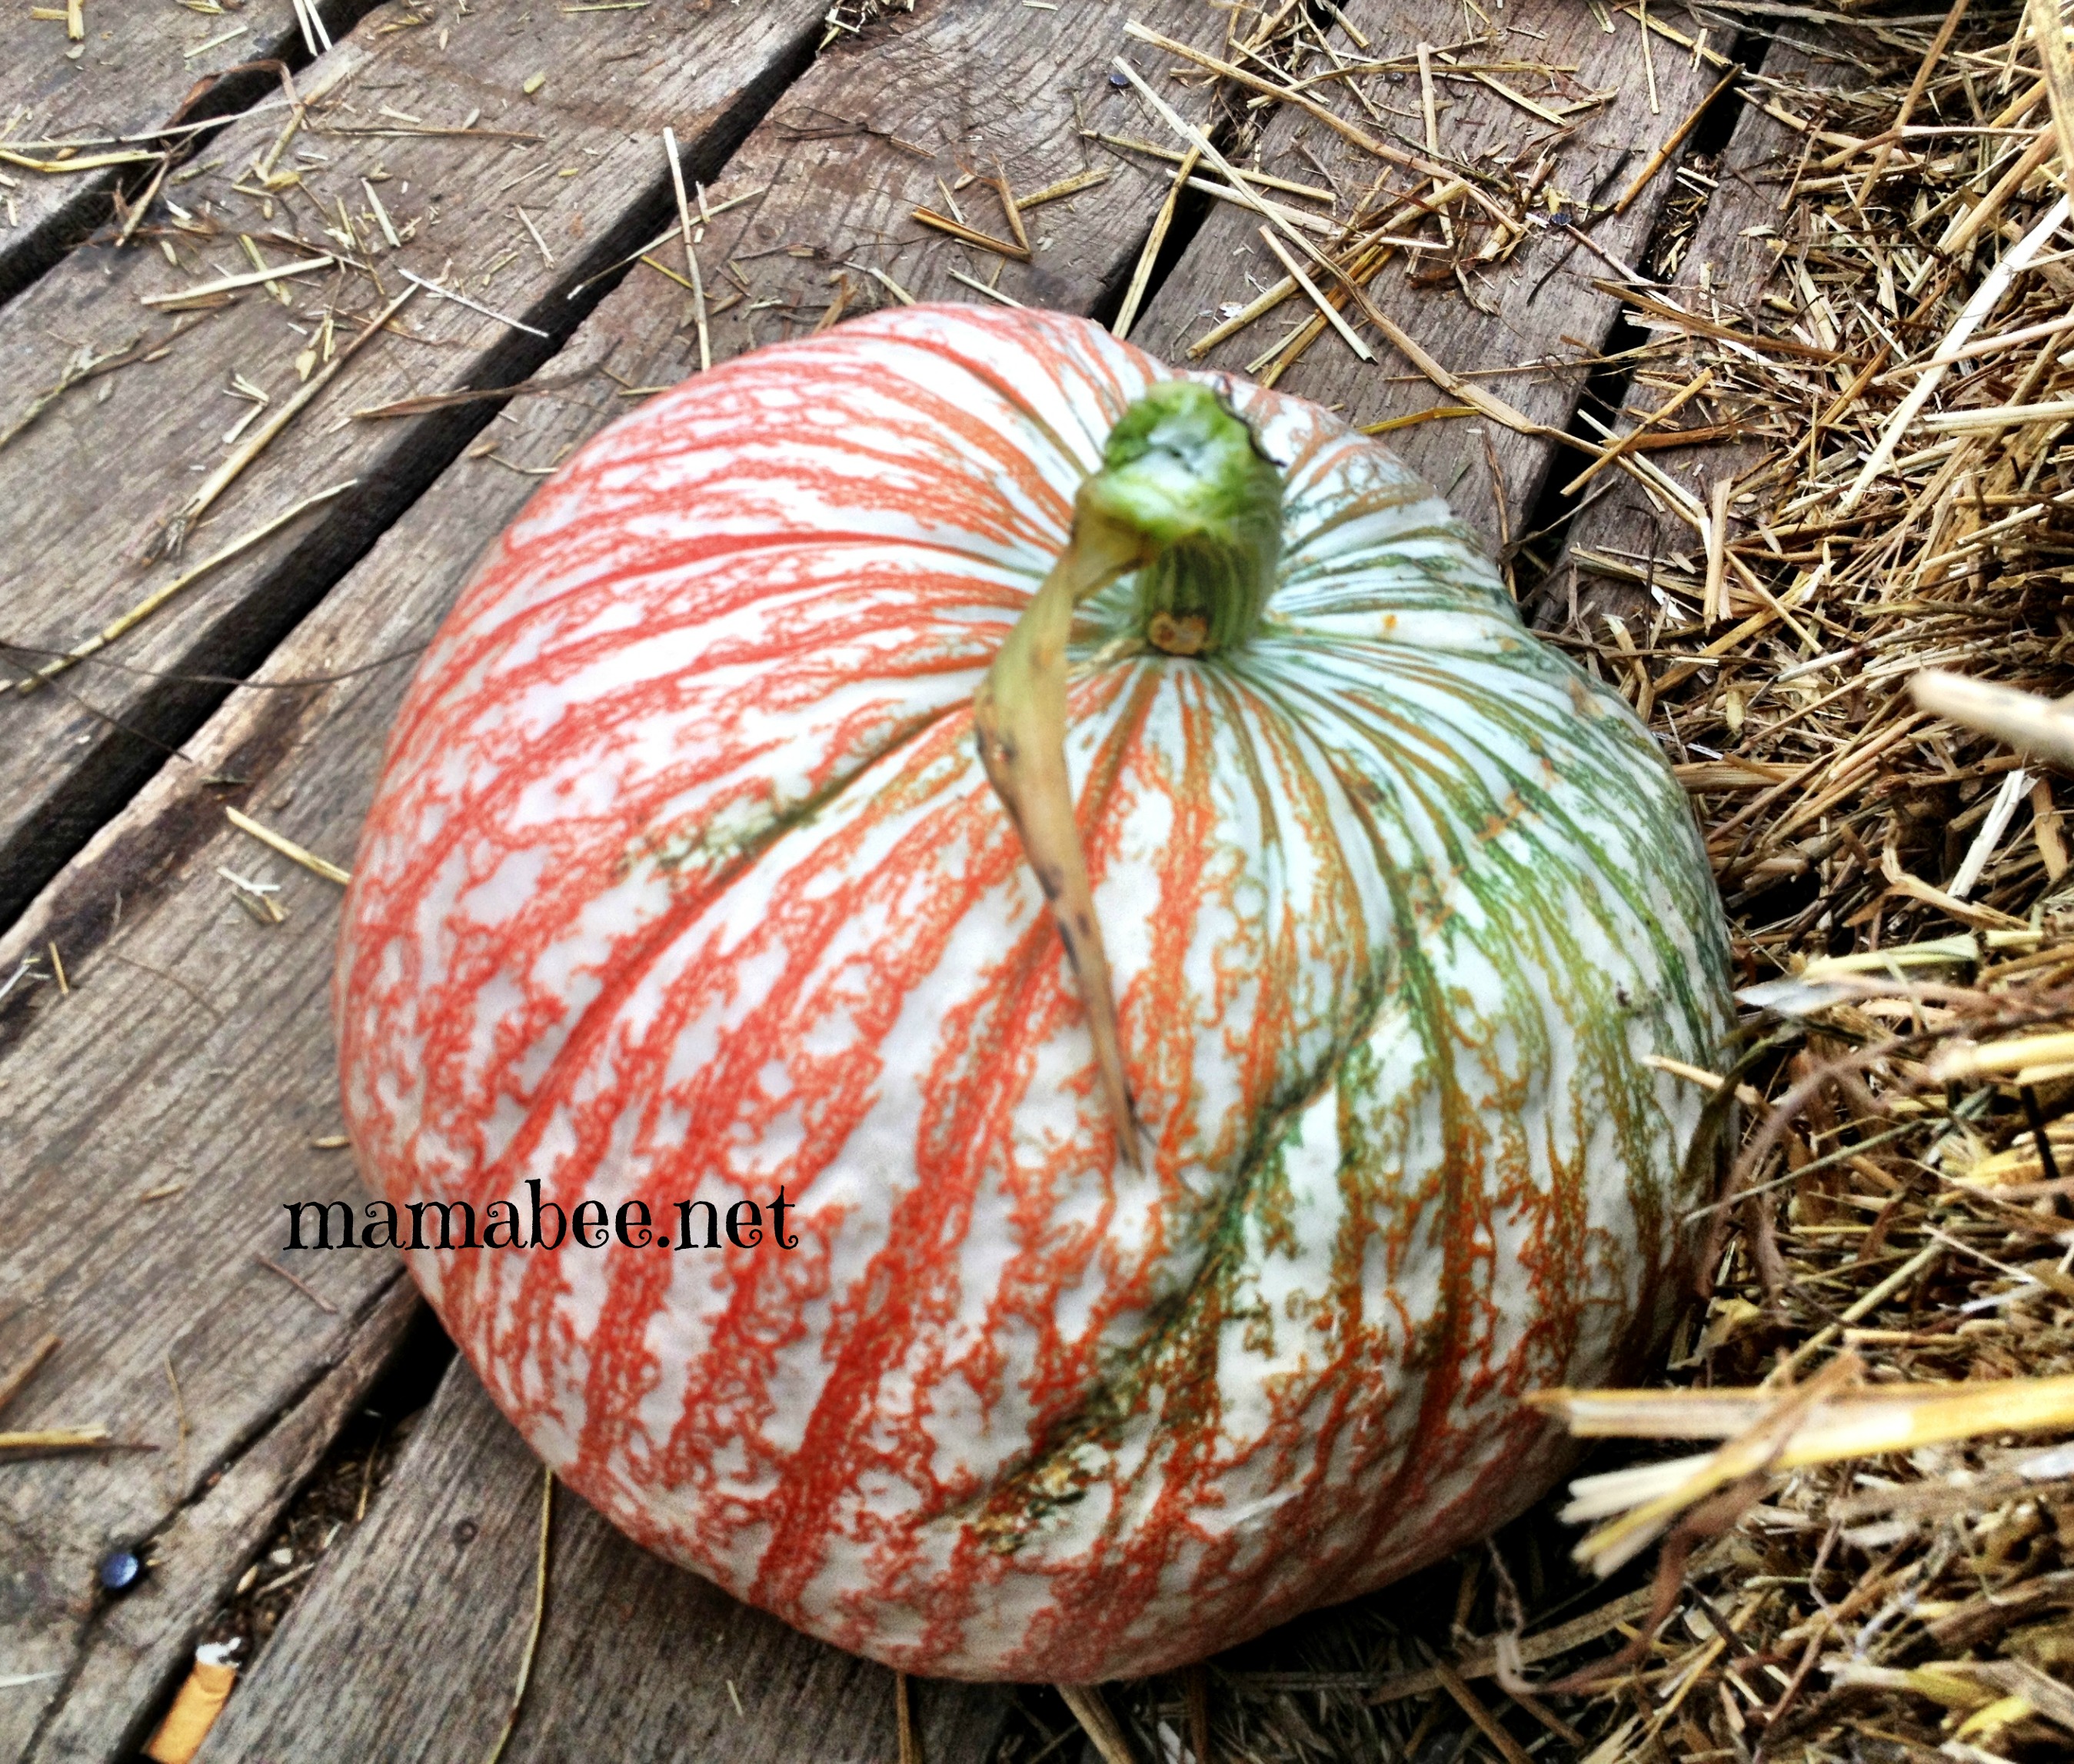 "fall family fun Lynchburg VA area corn maze pumpkin patch farm"